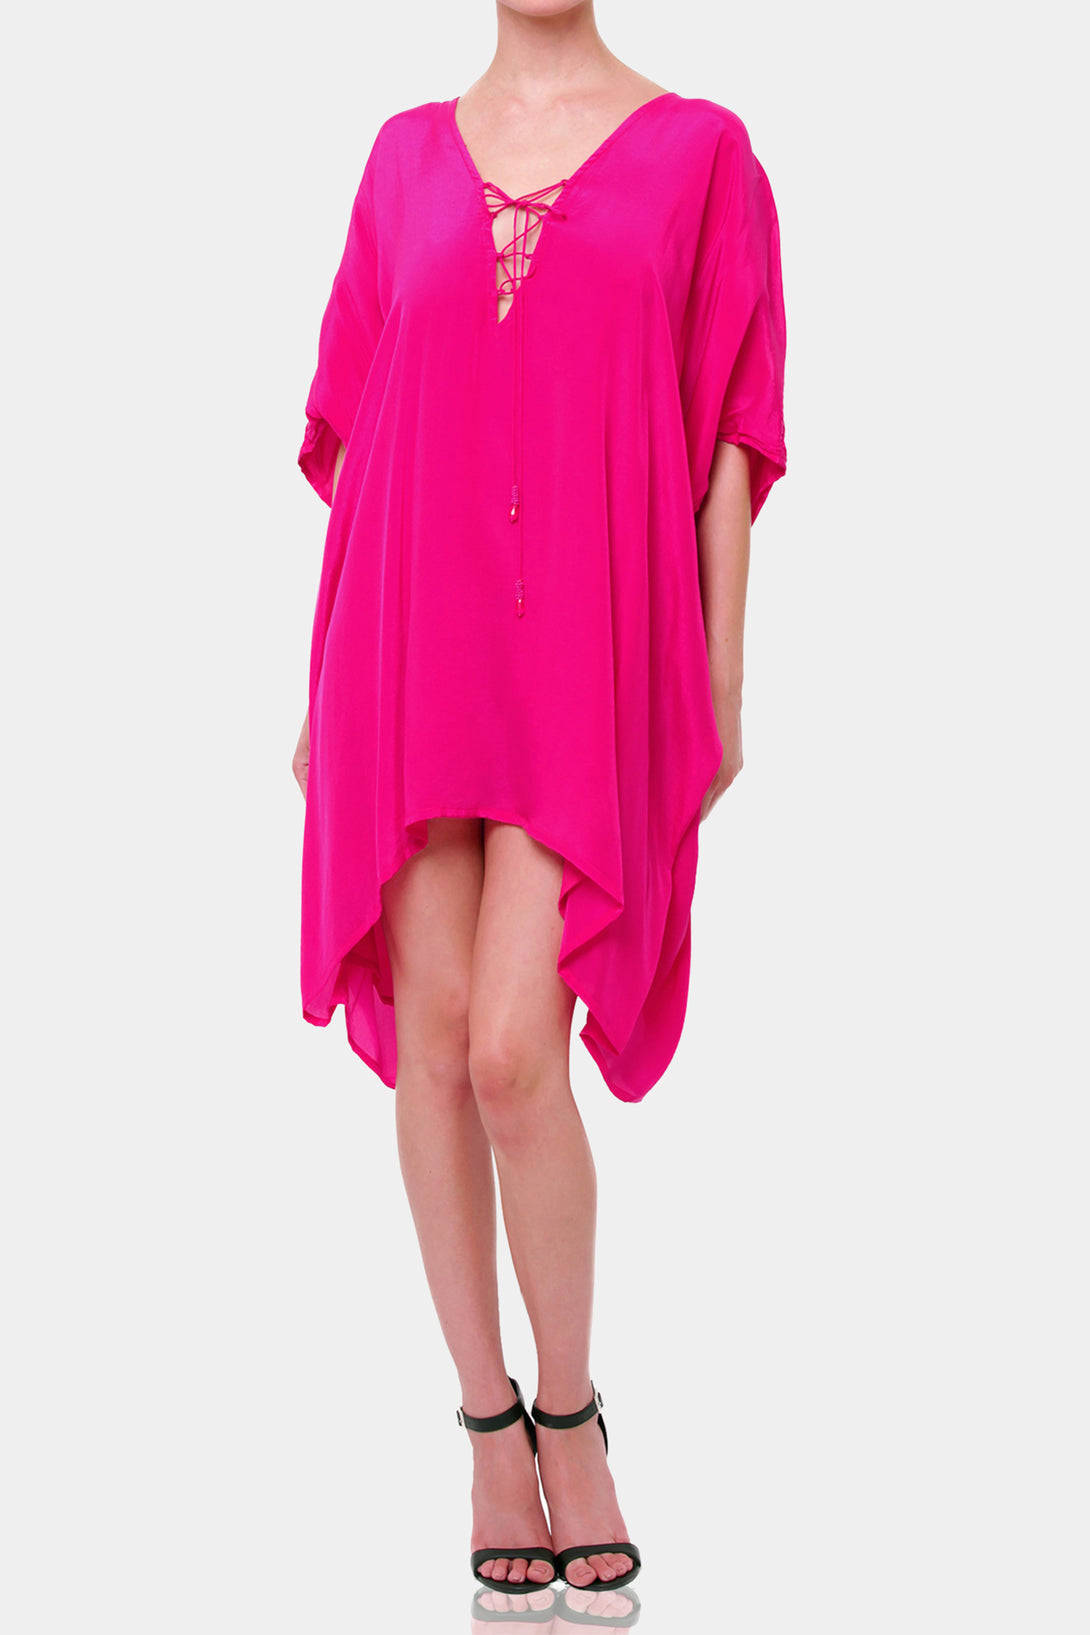  hot pink short dress, Shahida Parides, silk caftans,short sleeveless summer dresses, cute mini dresses,